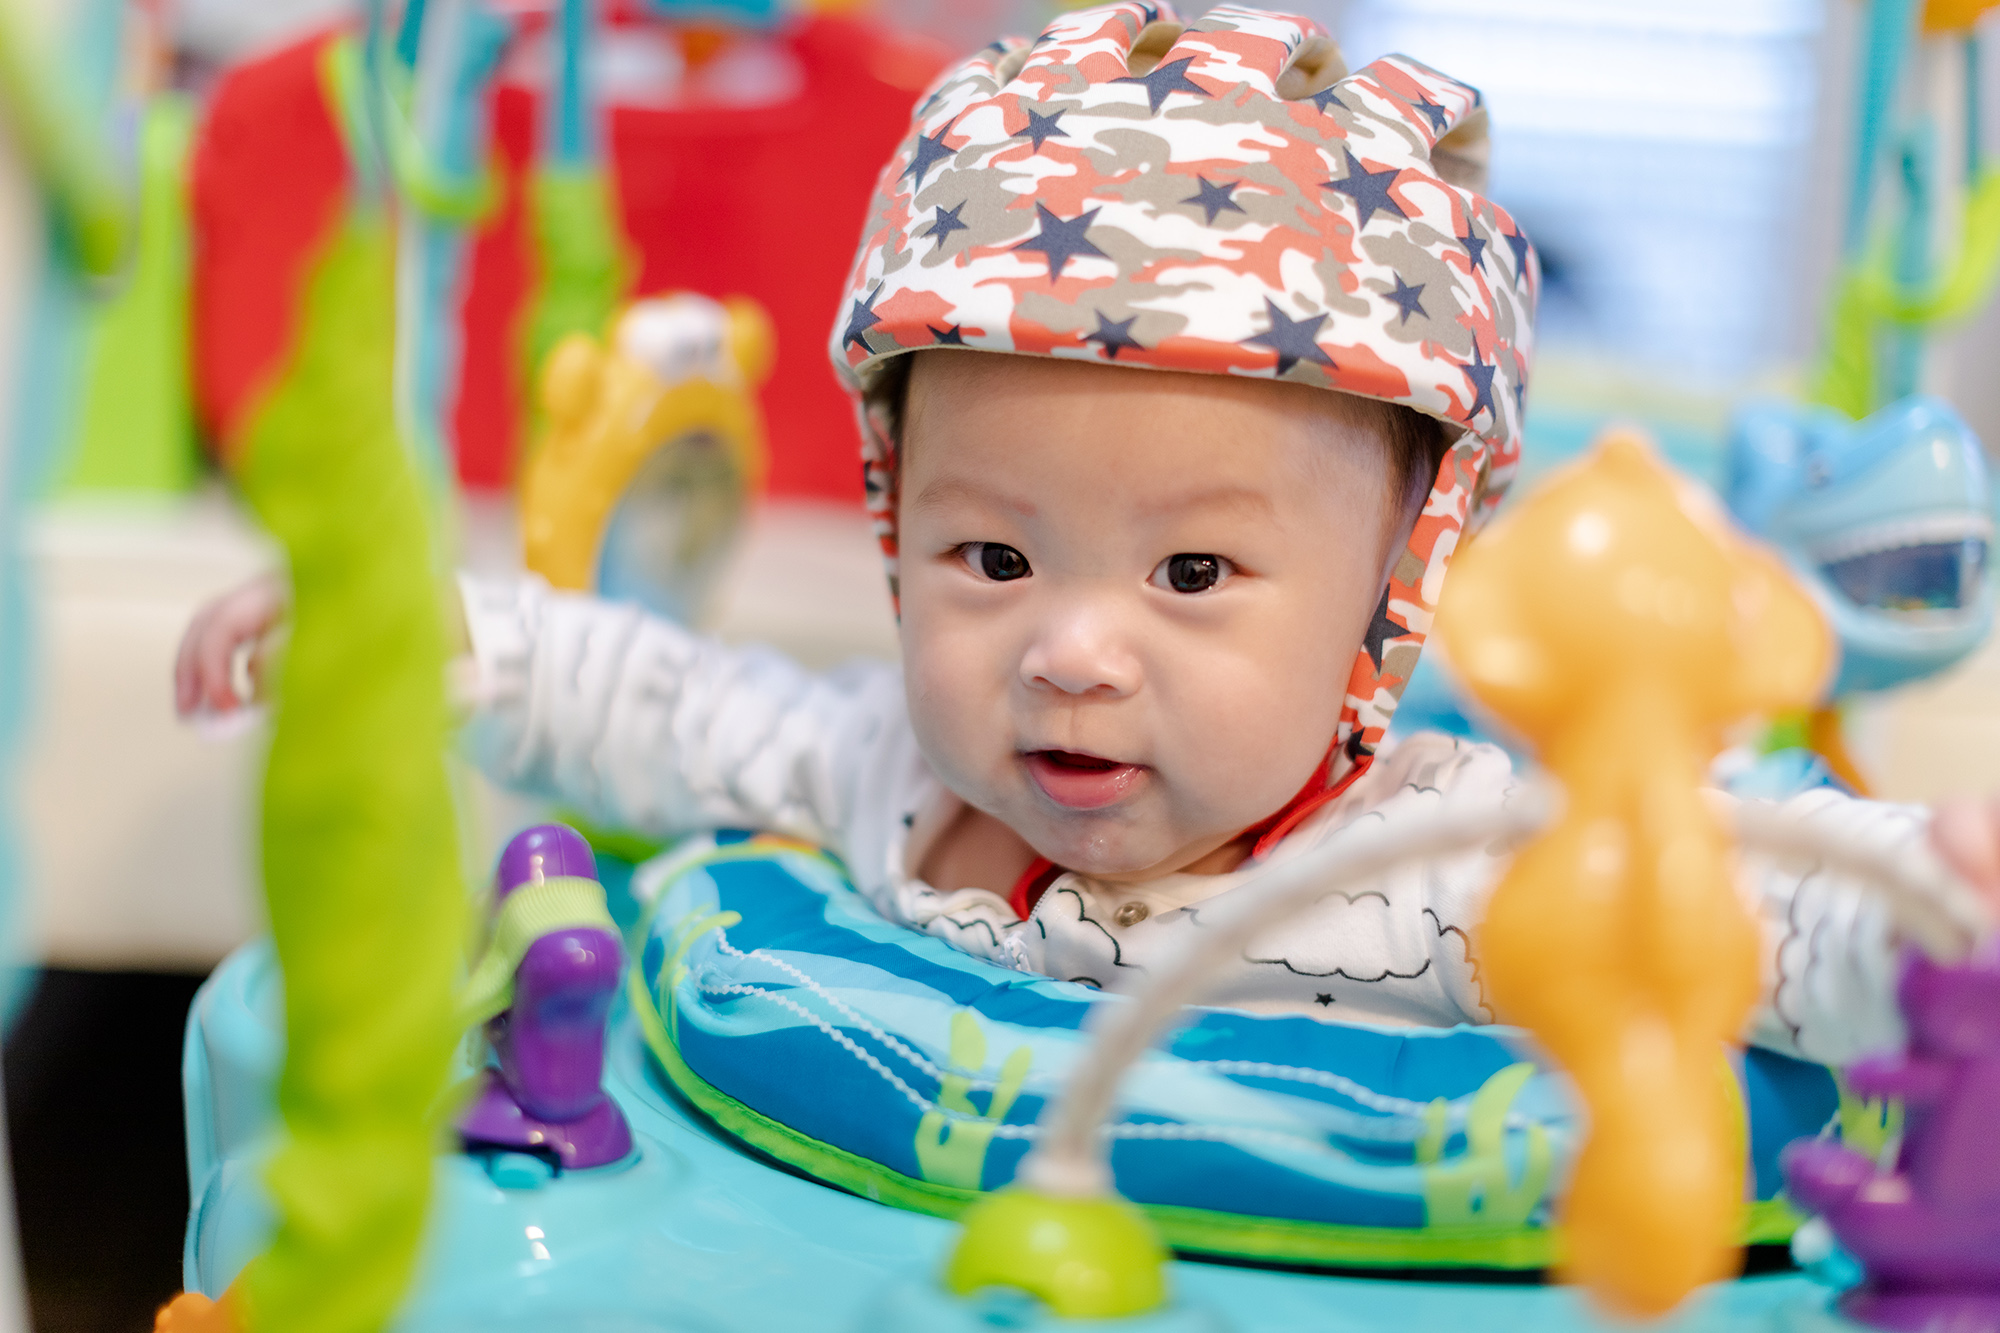 baby wearing orthopedic helmet after craniosynostosis surgery